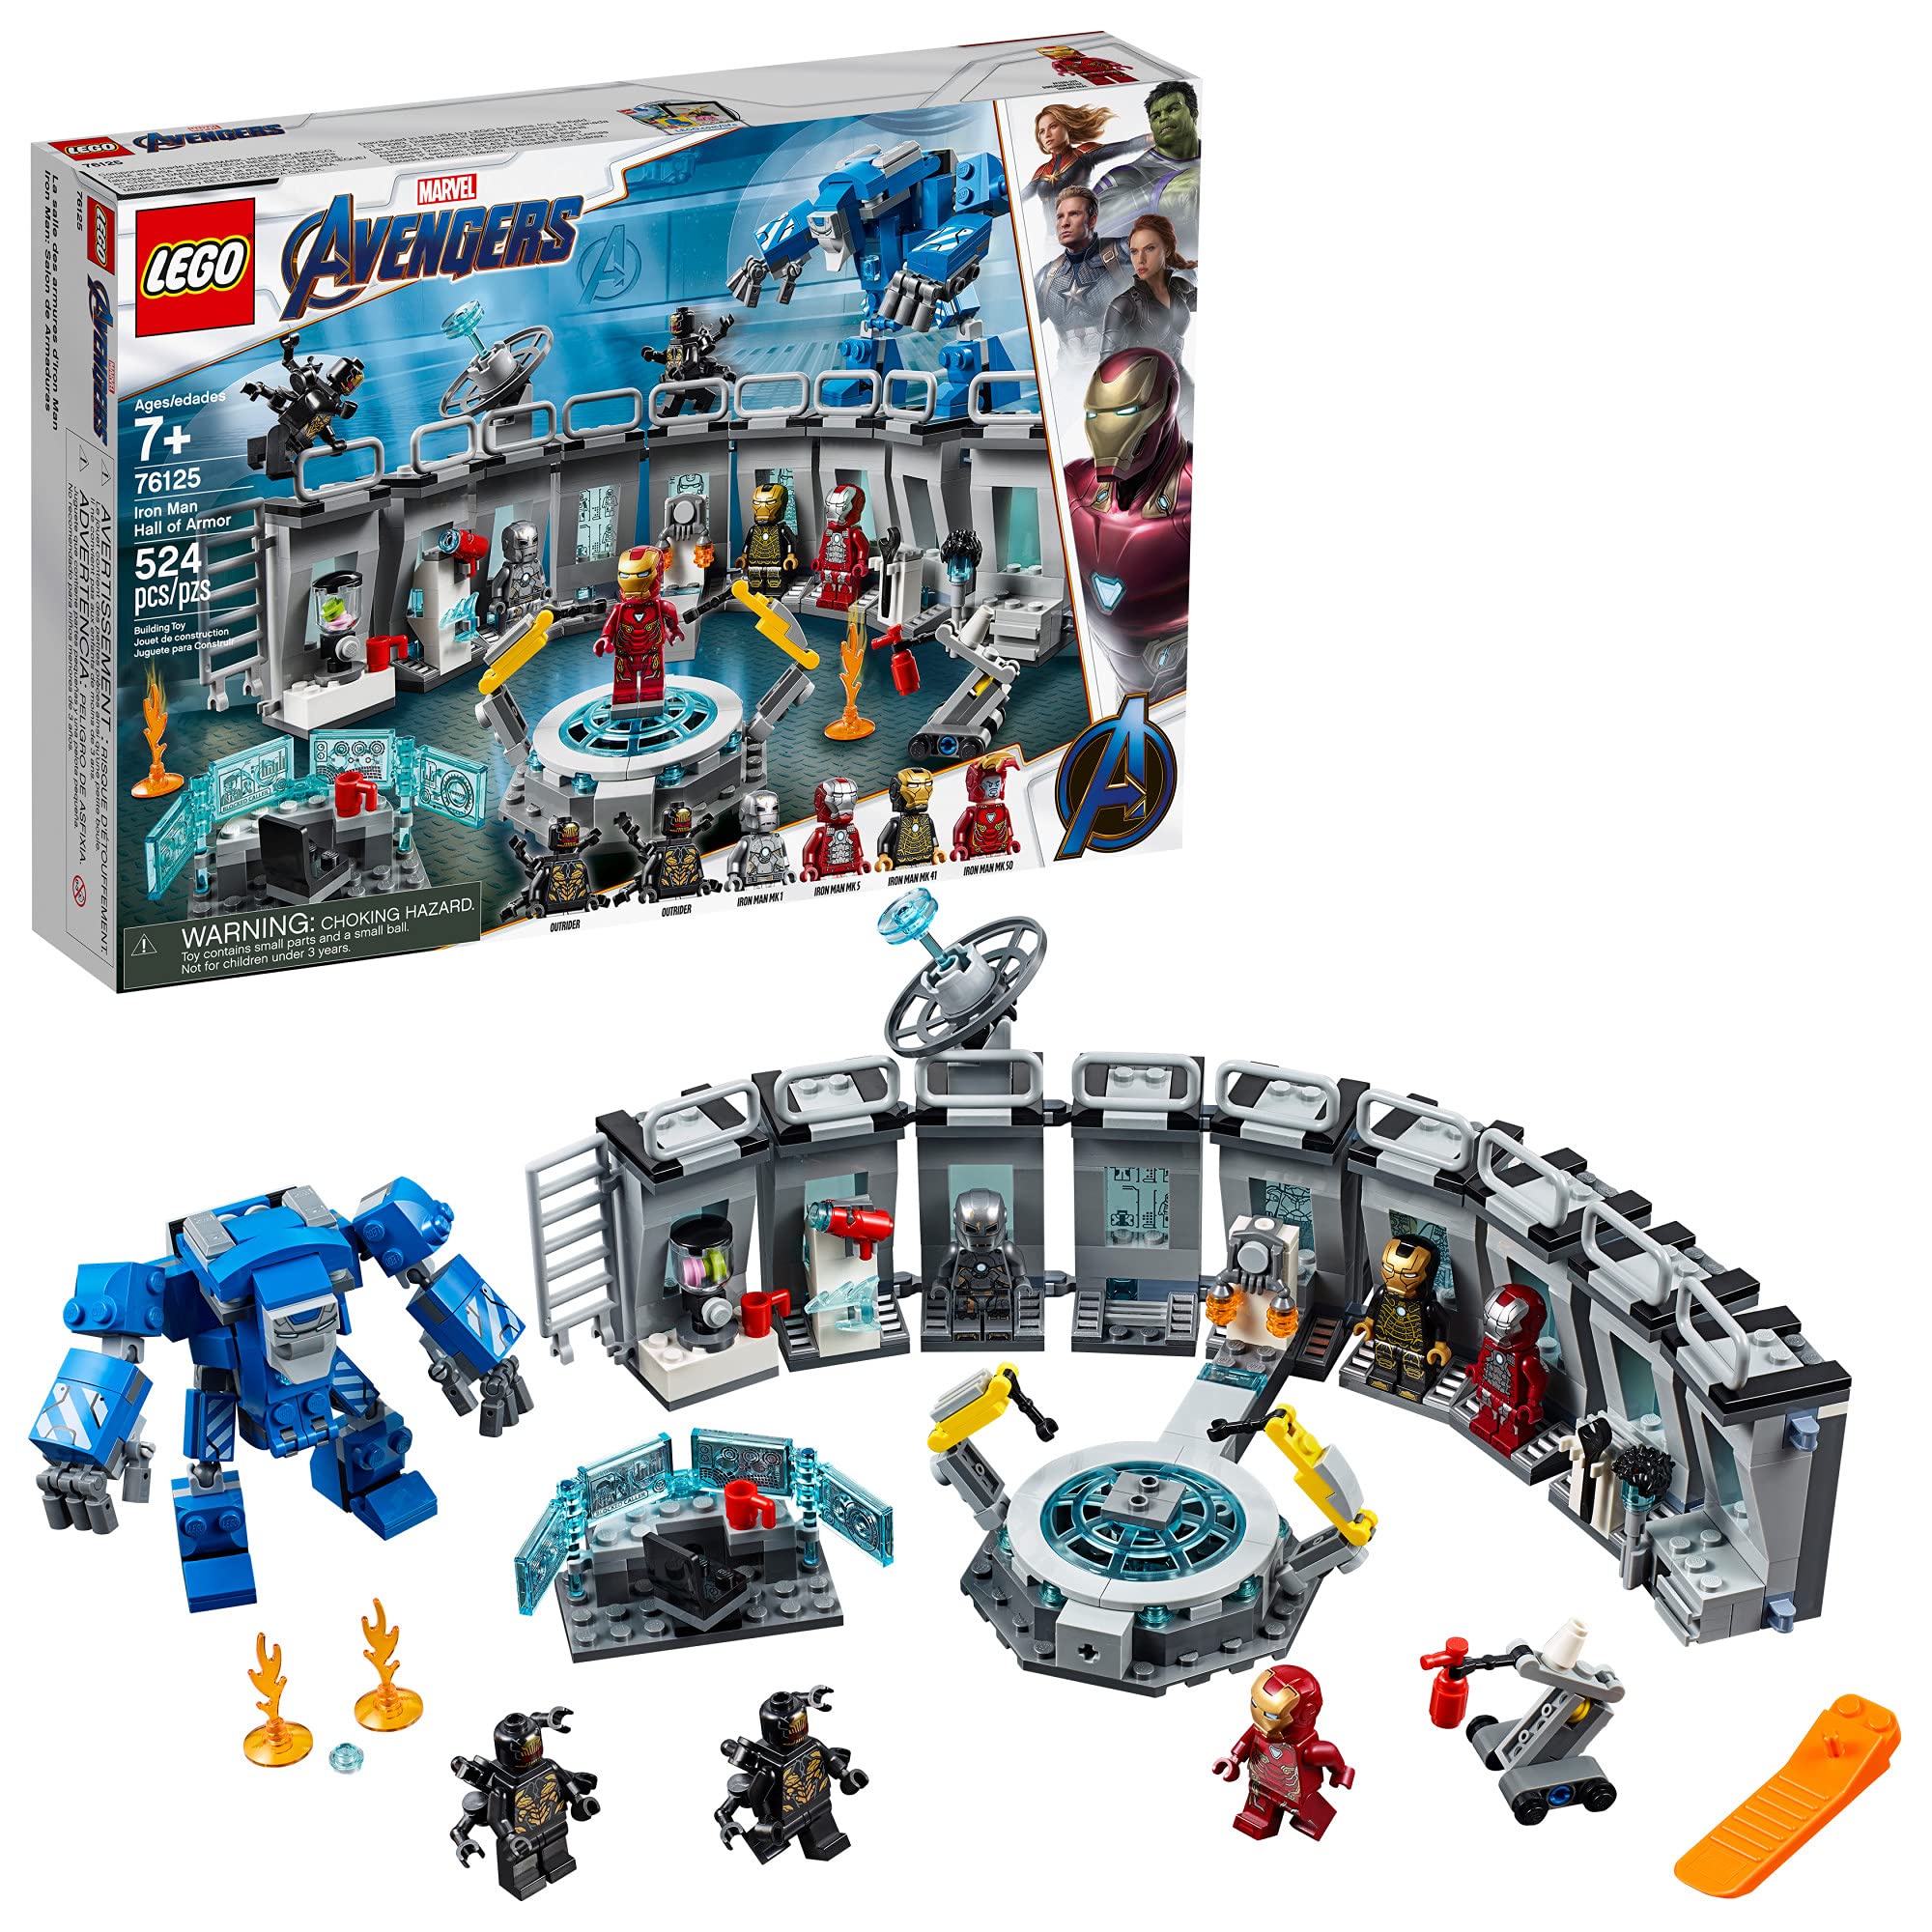 Retired LEGO Marvel Avengers Iron Man Hall of Armor 76125 $47.99 @ Amazon